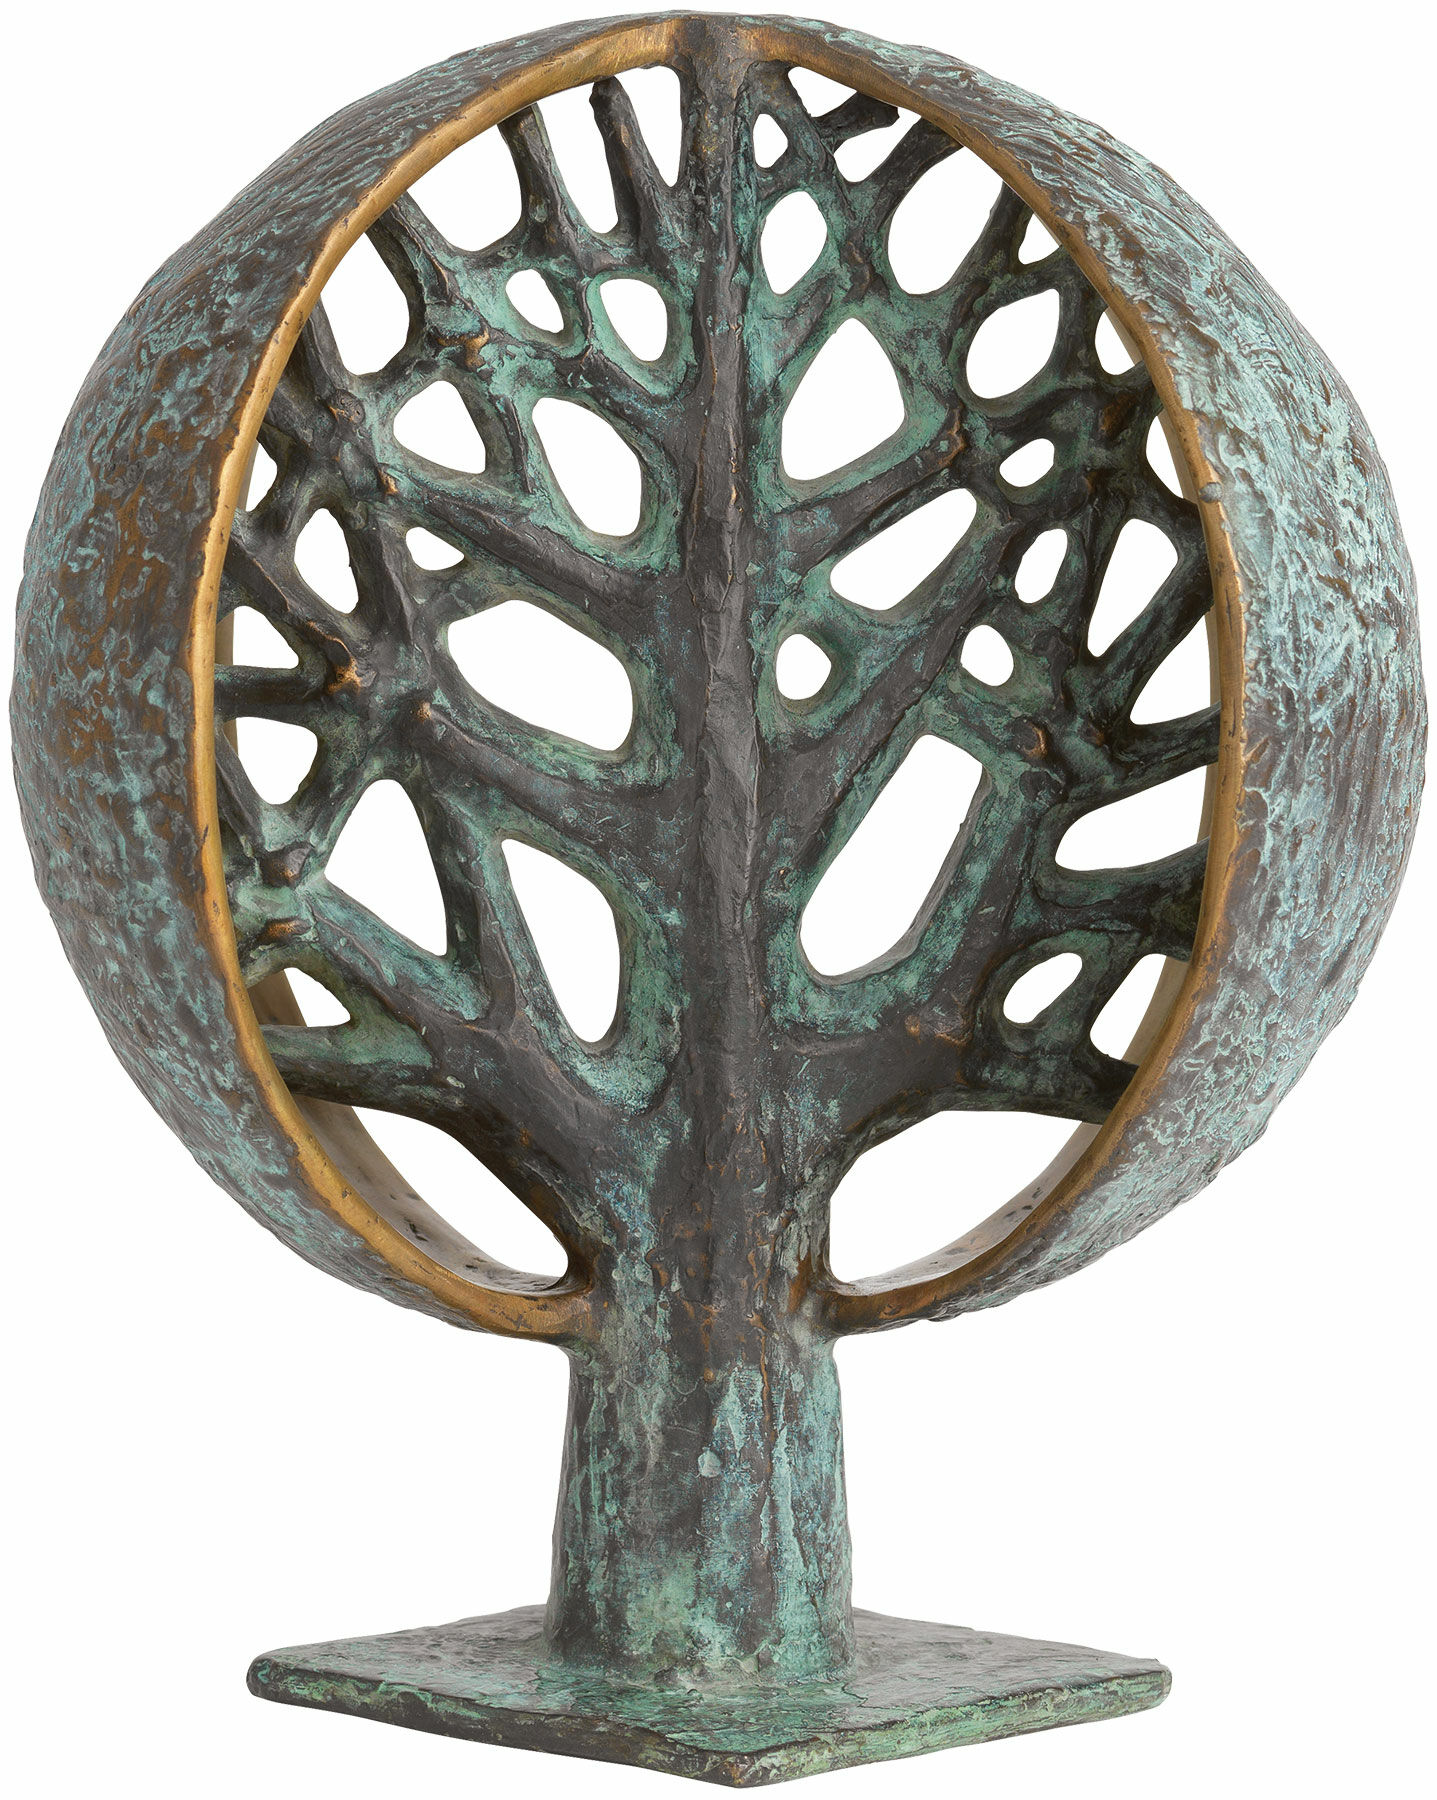 Sculpture "Tree of Life" (1979), bronze by Gerhard Brandes